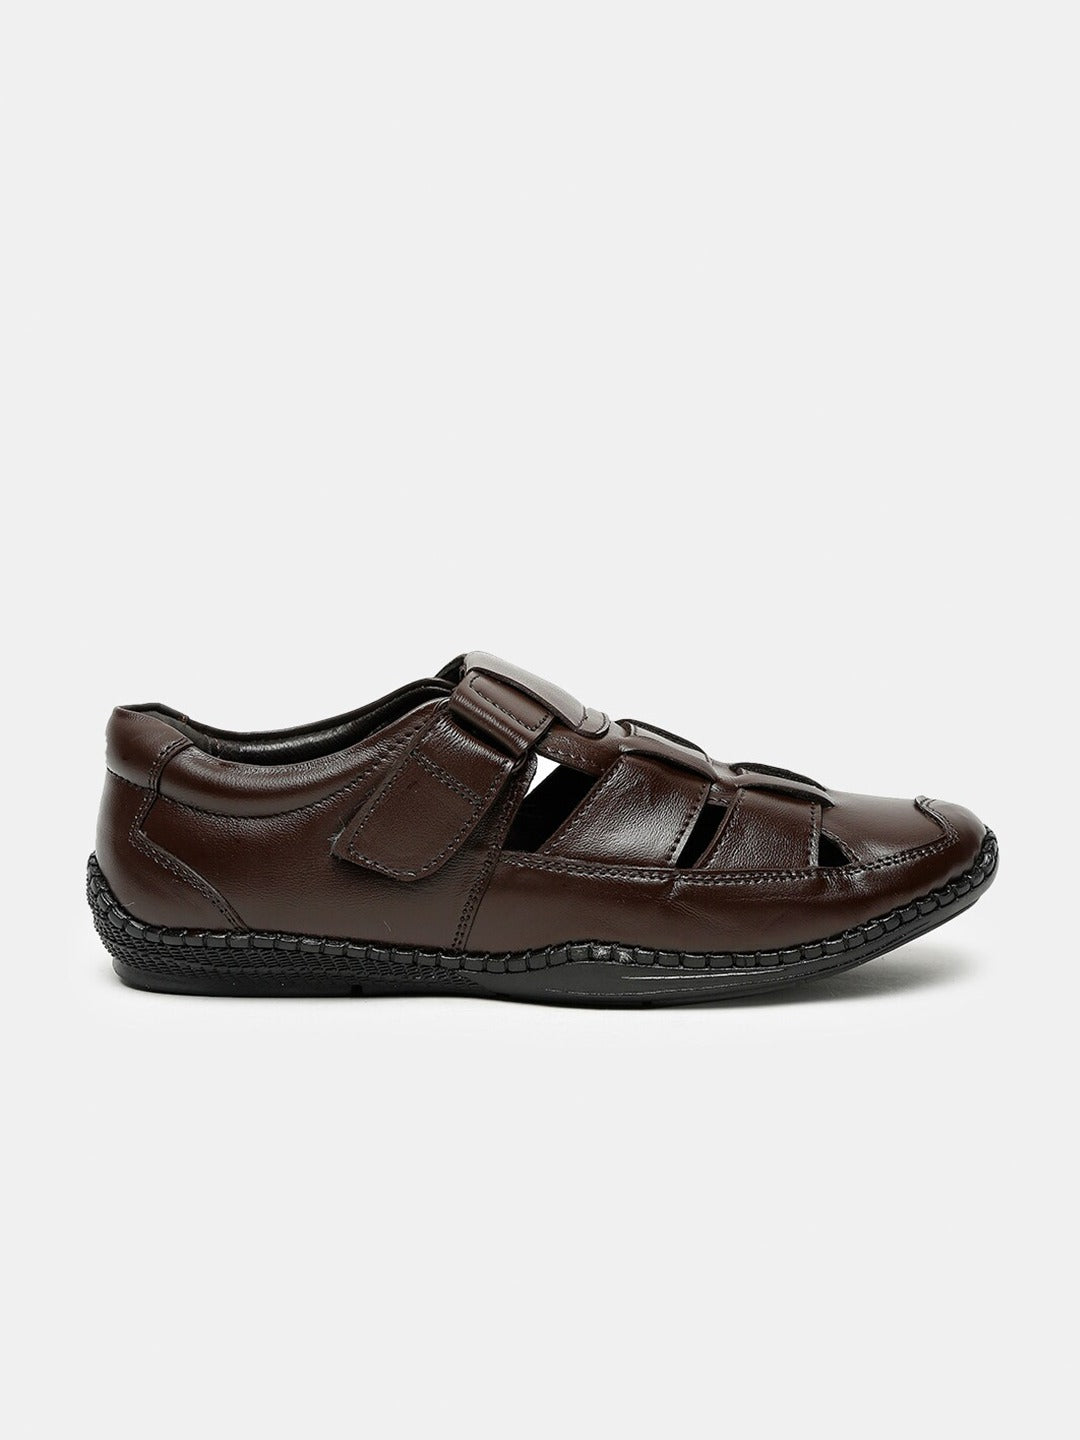 Shences men genuine leather sandalsTRH6504  Shences